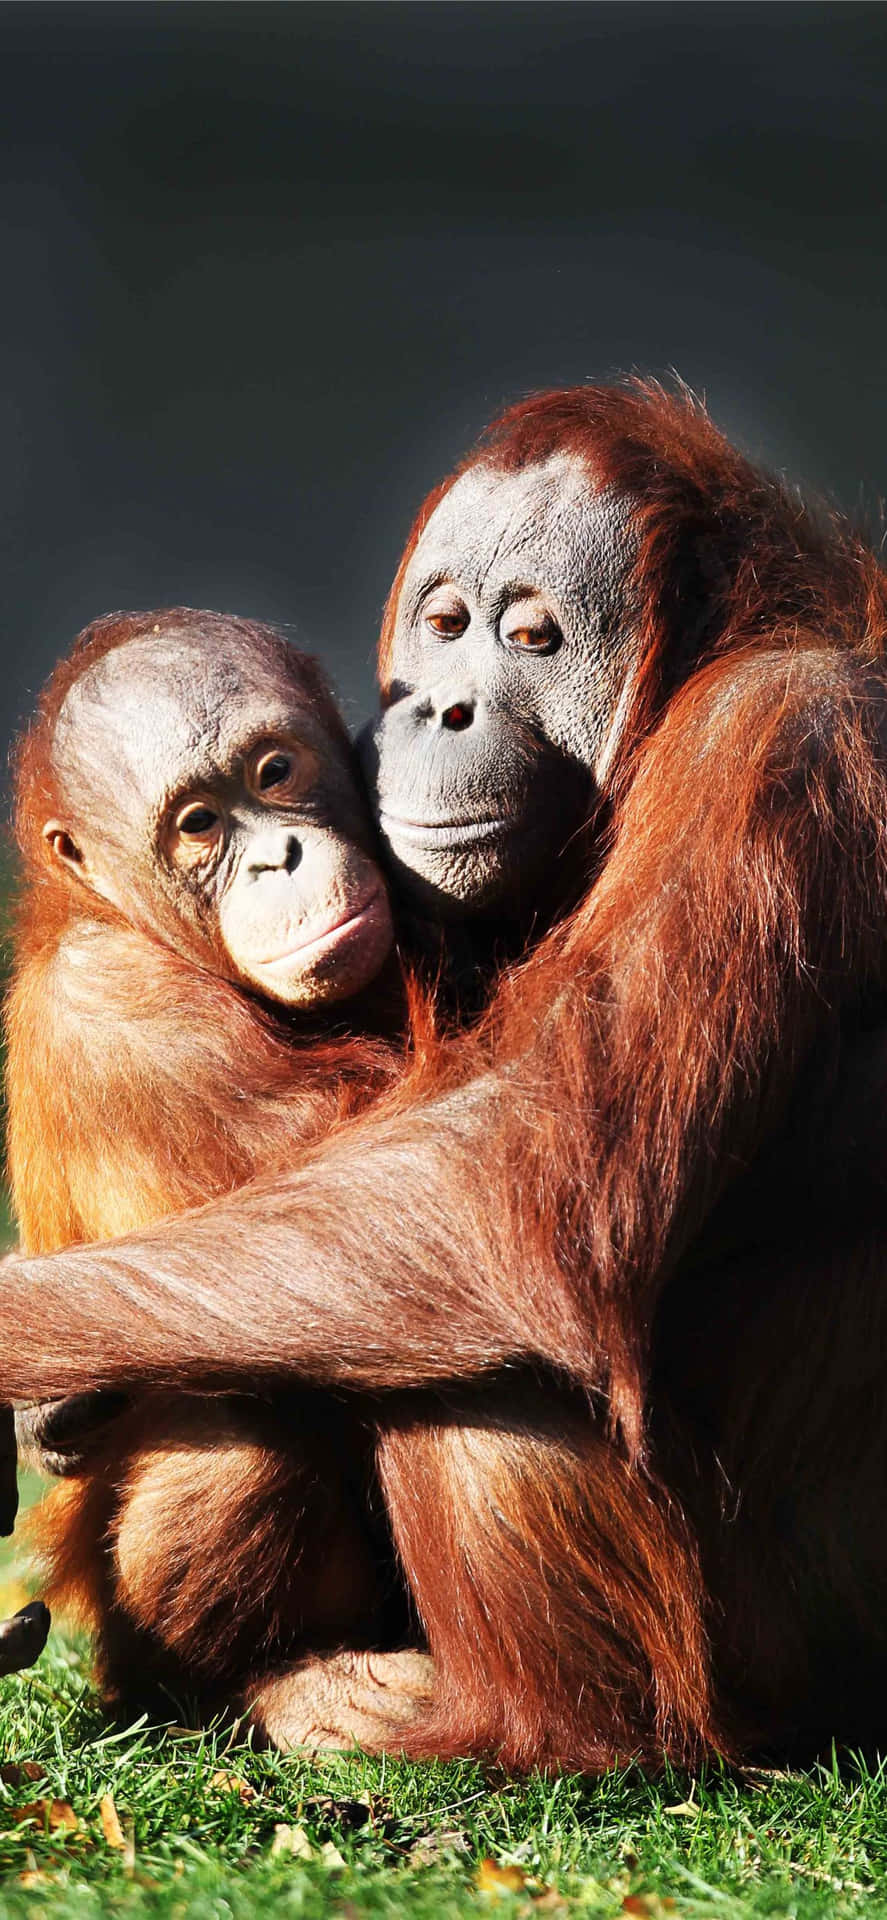 Orangutang 1284 X 2778 Wallpaper